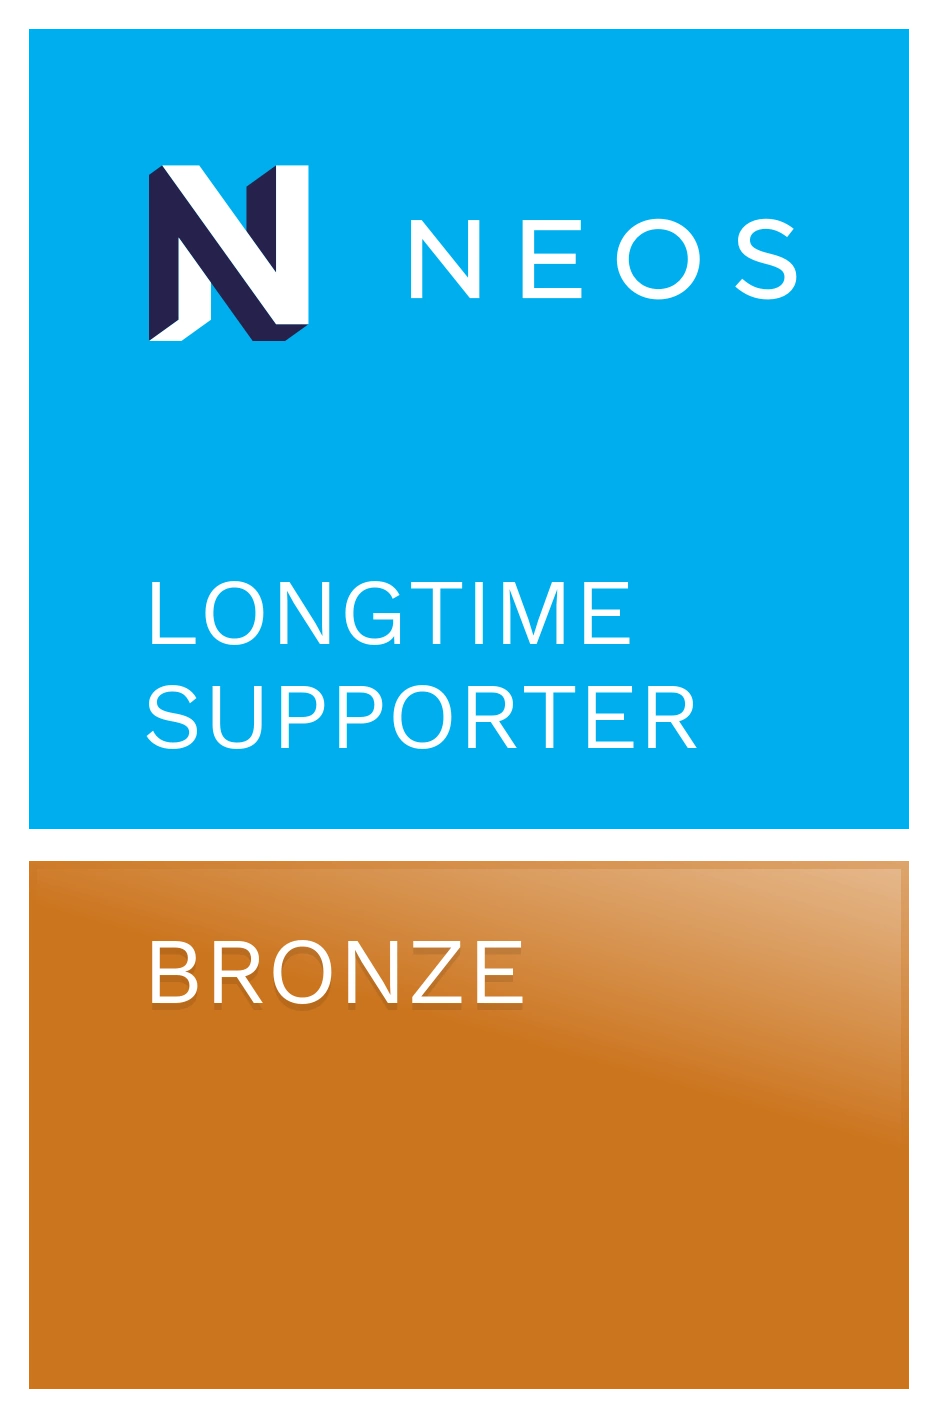 NEOS Agentur - Longtime Supporter